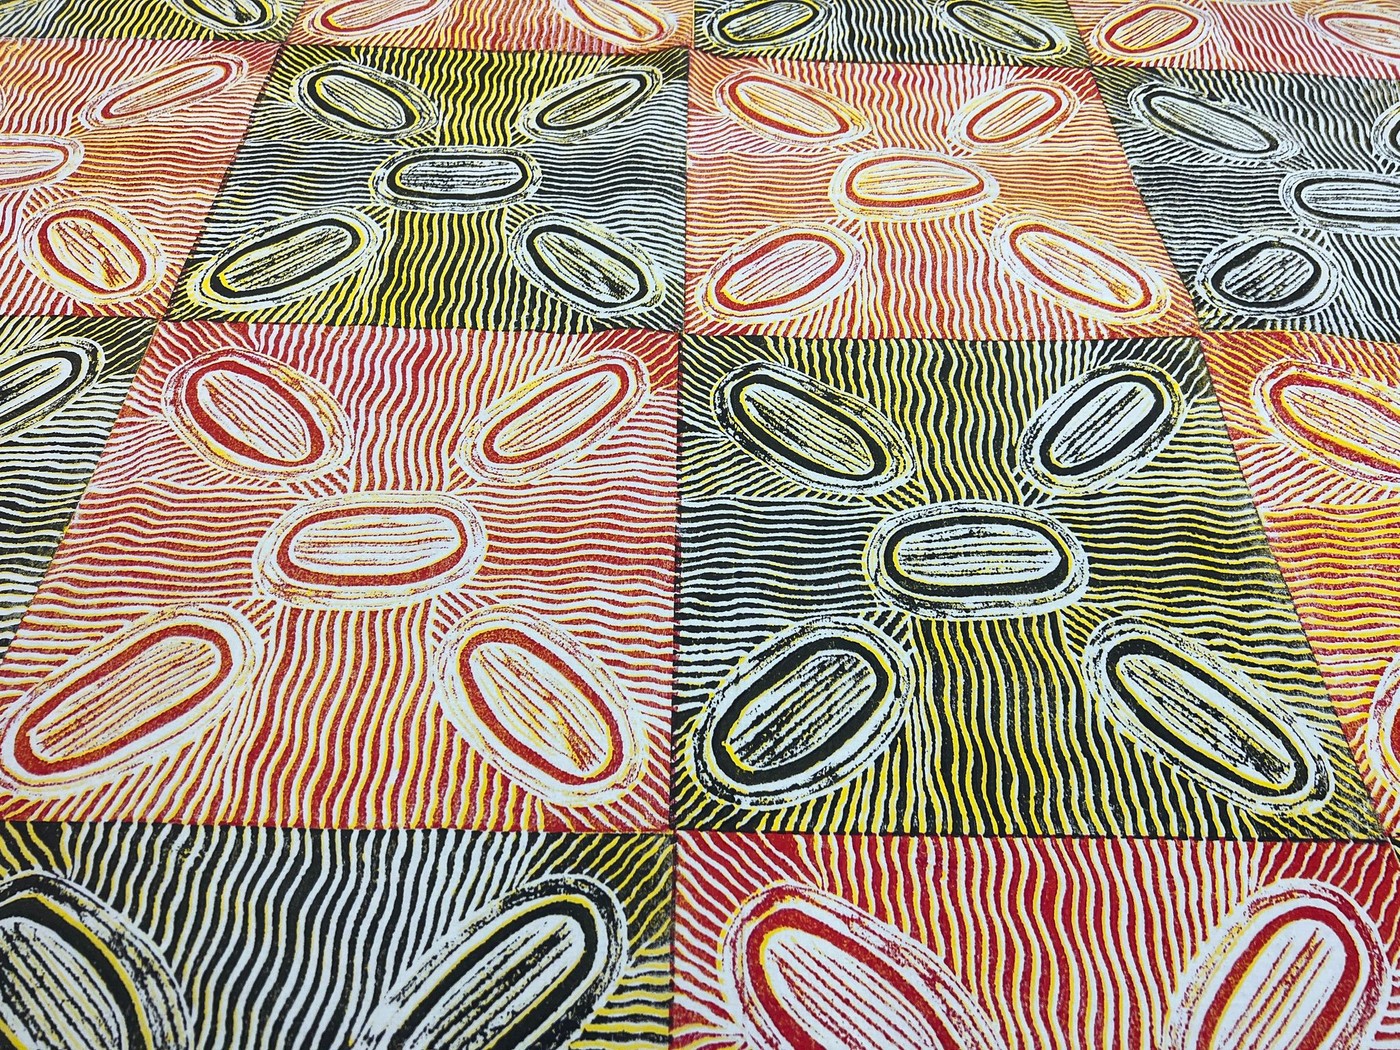 Kayawa (baby floor mat) by Raylene Bonson